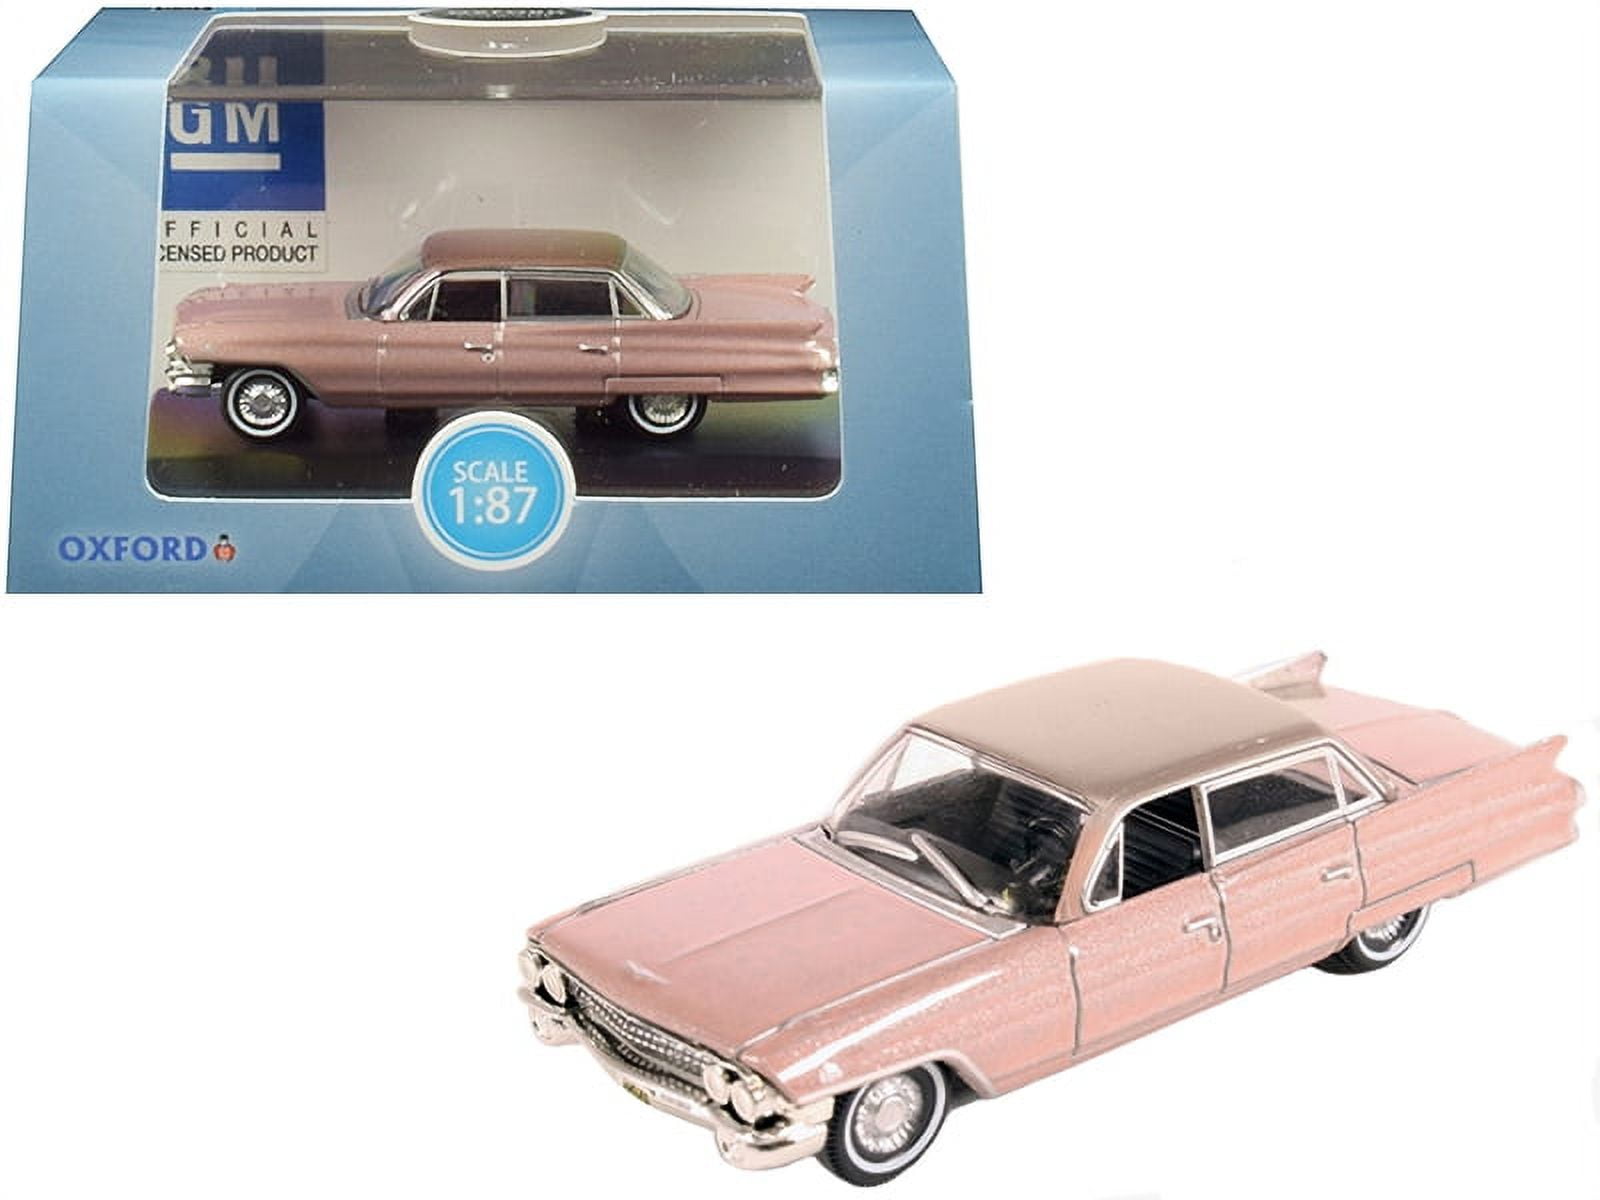 87csd61001 1961 Cadillac Sedan Deville Metallic Pink 1-87 Ho Scale Diecast Model Car